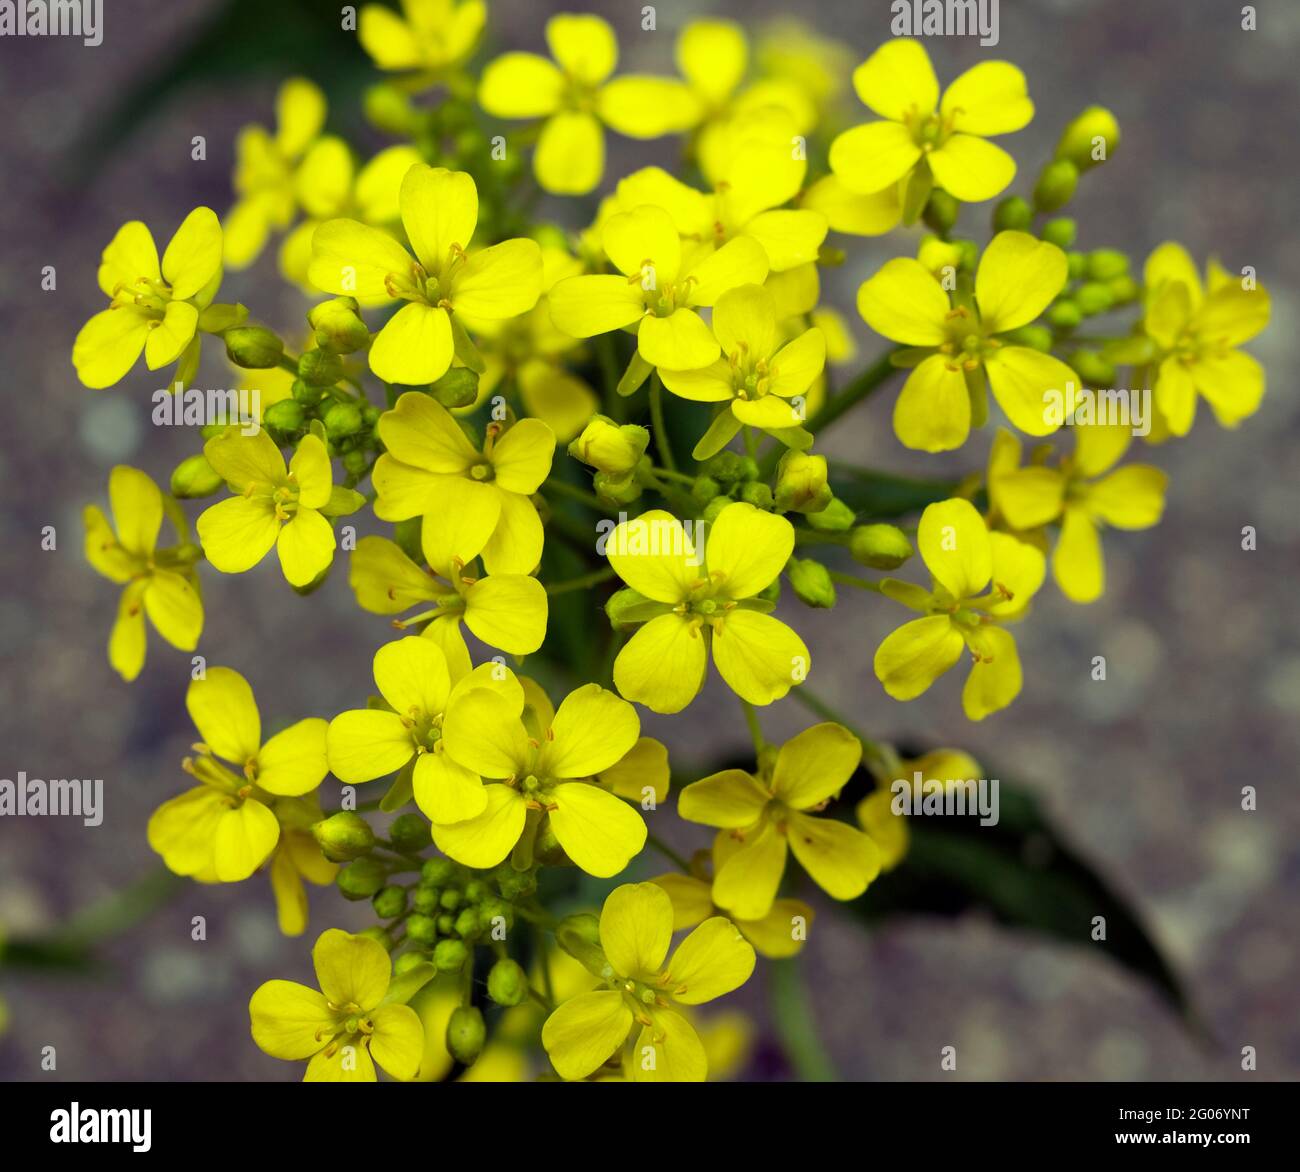 Bunias orientalis, the Turkish wartycabbage, warty-cabbage, hill mustard, or Turkish rocket flowers in closeup Stock Photo